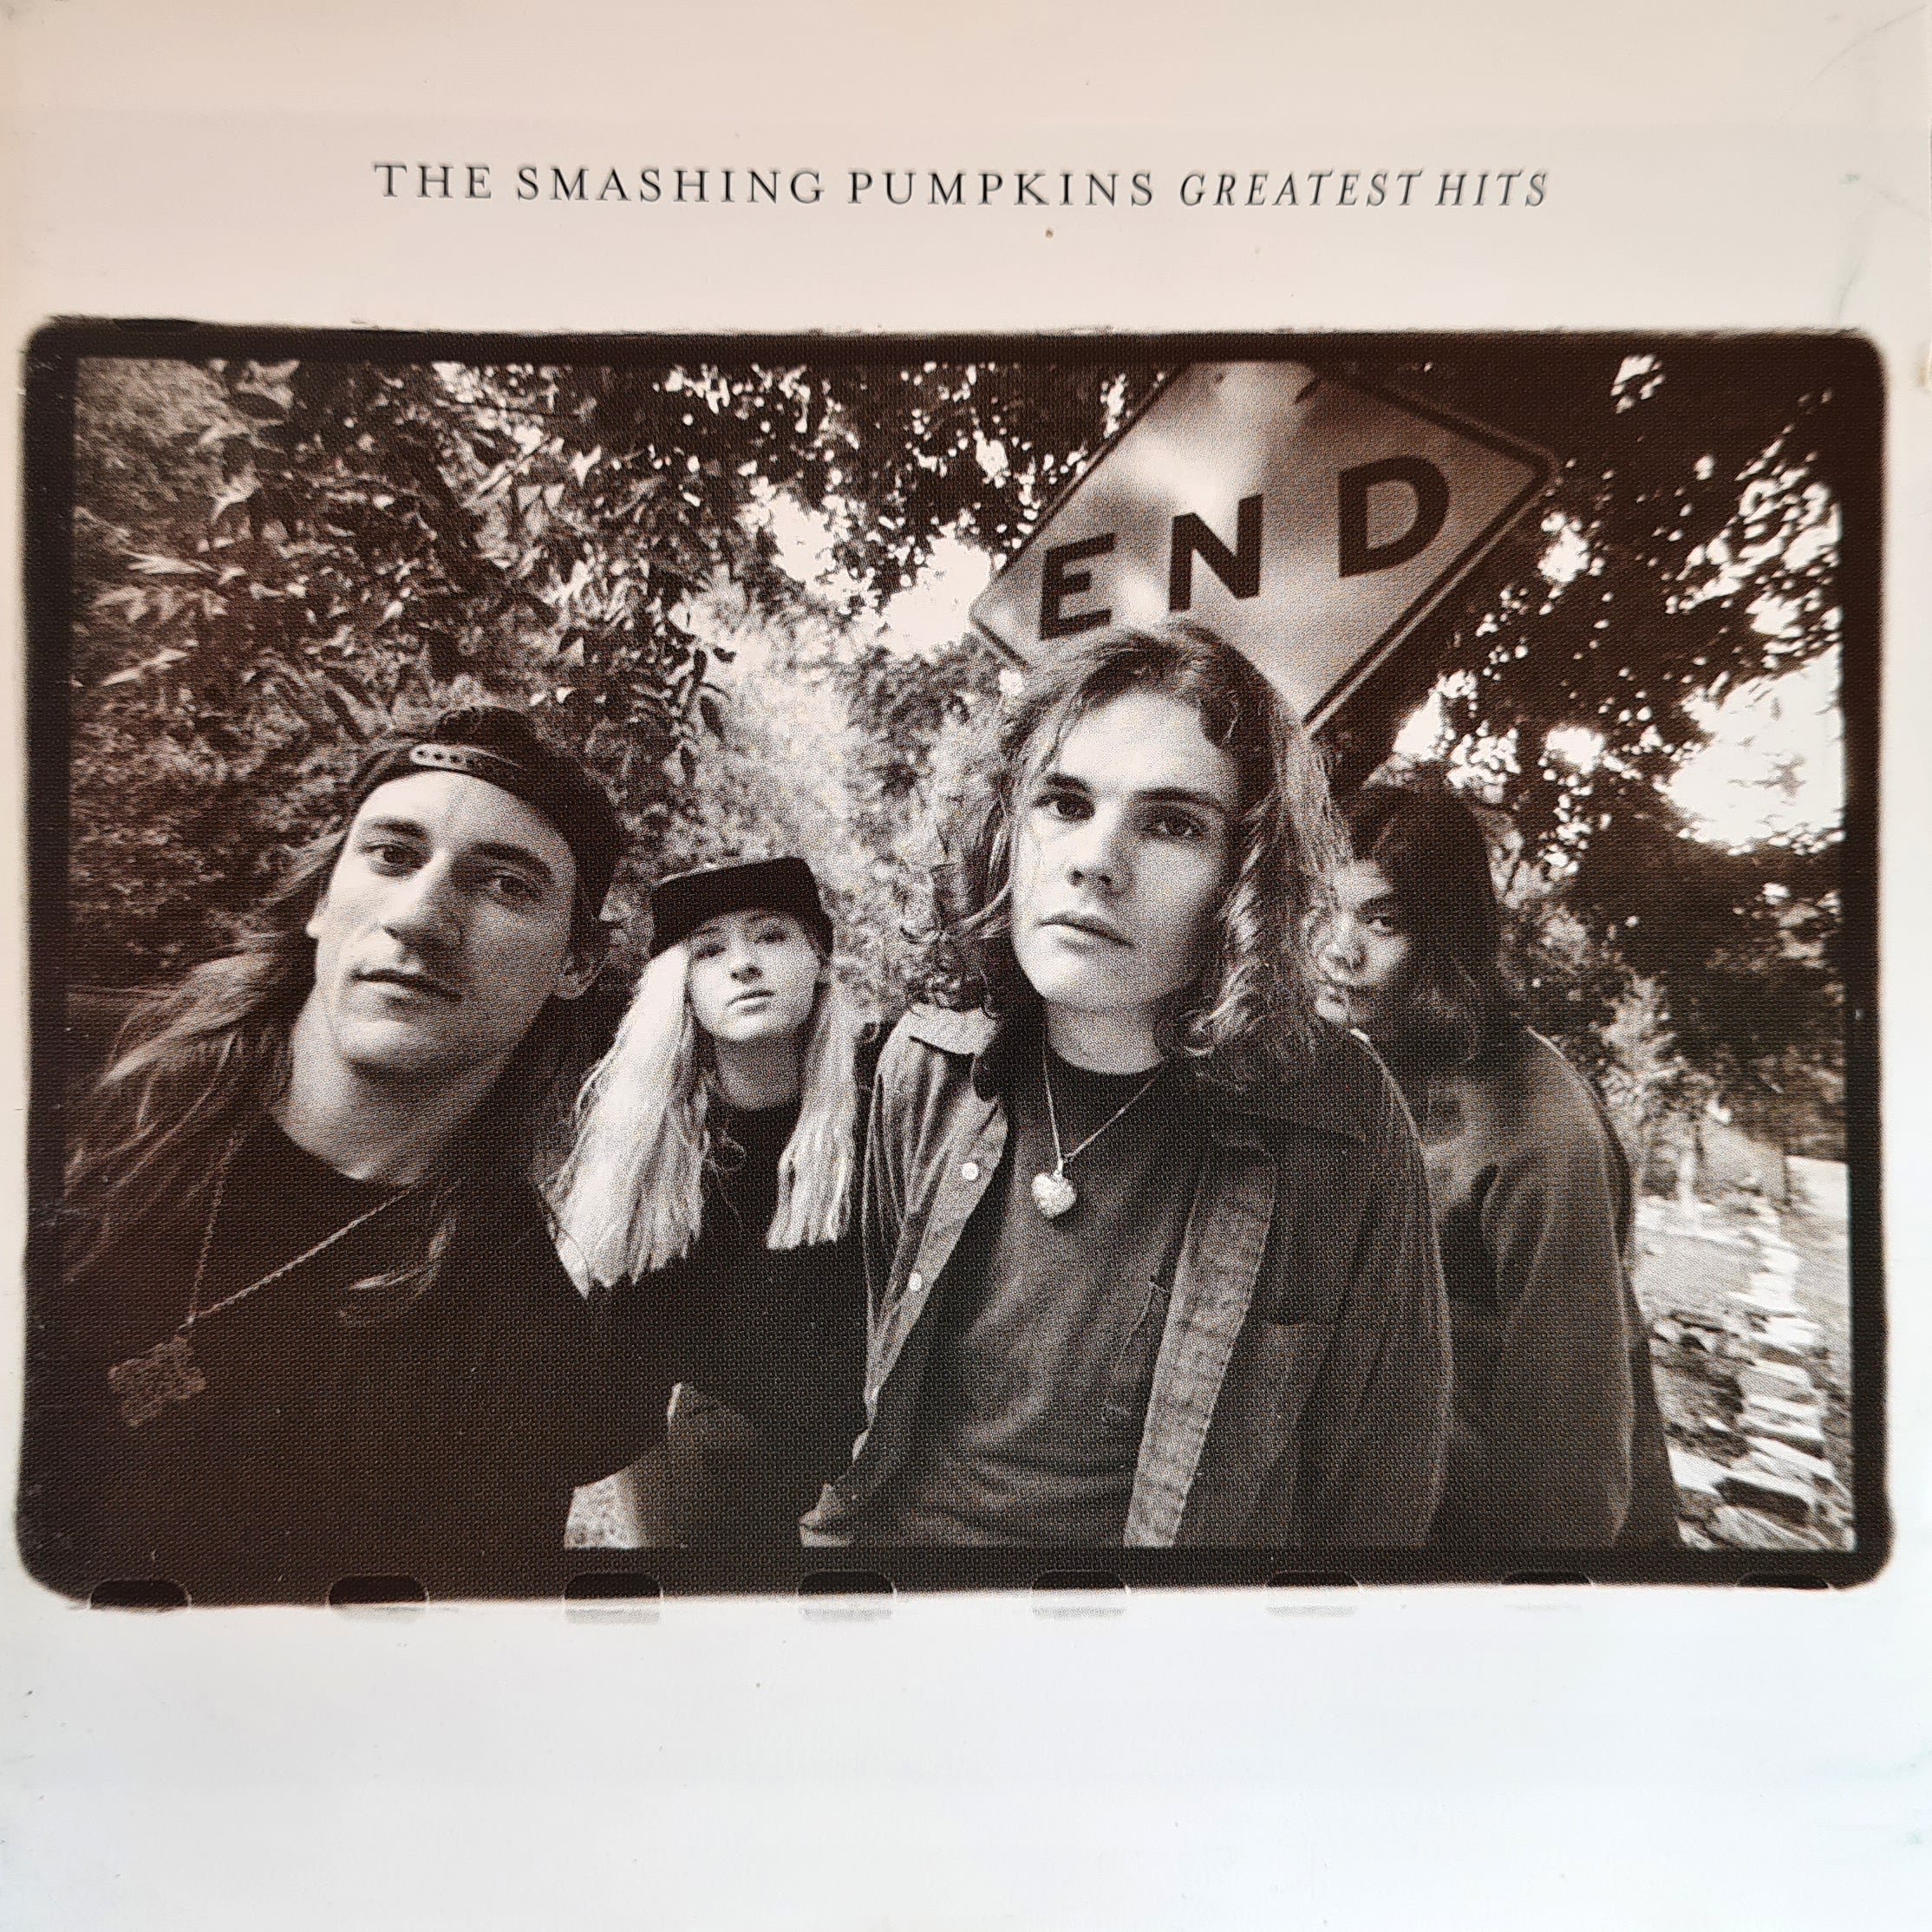 The Smashing Pumpkins - (Rotten Apples) Greatest Hits (CD)